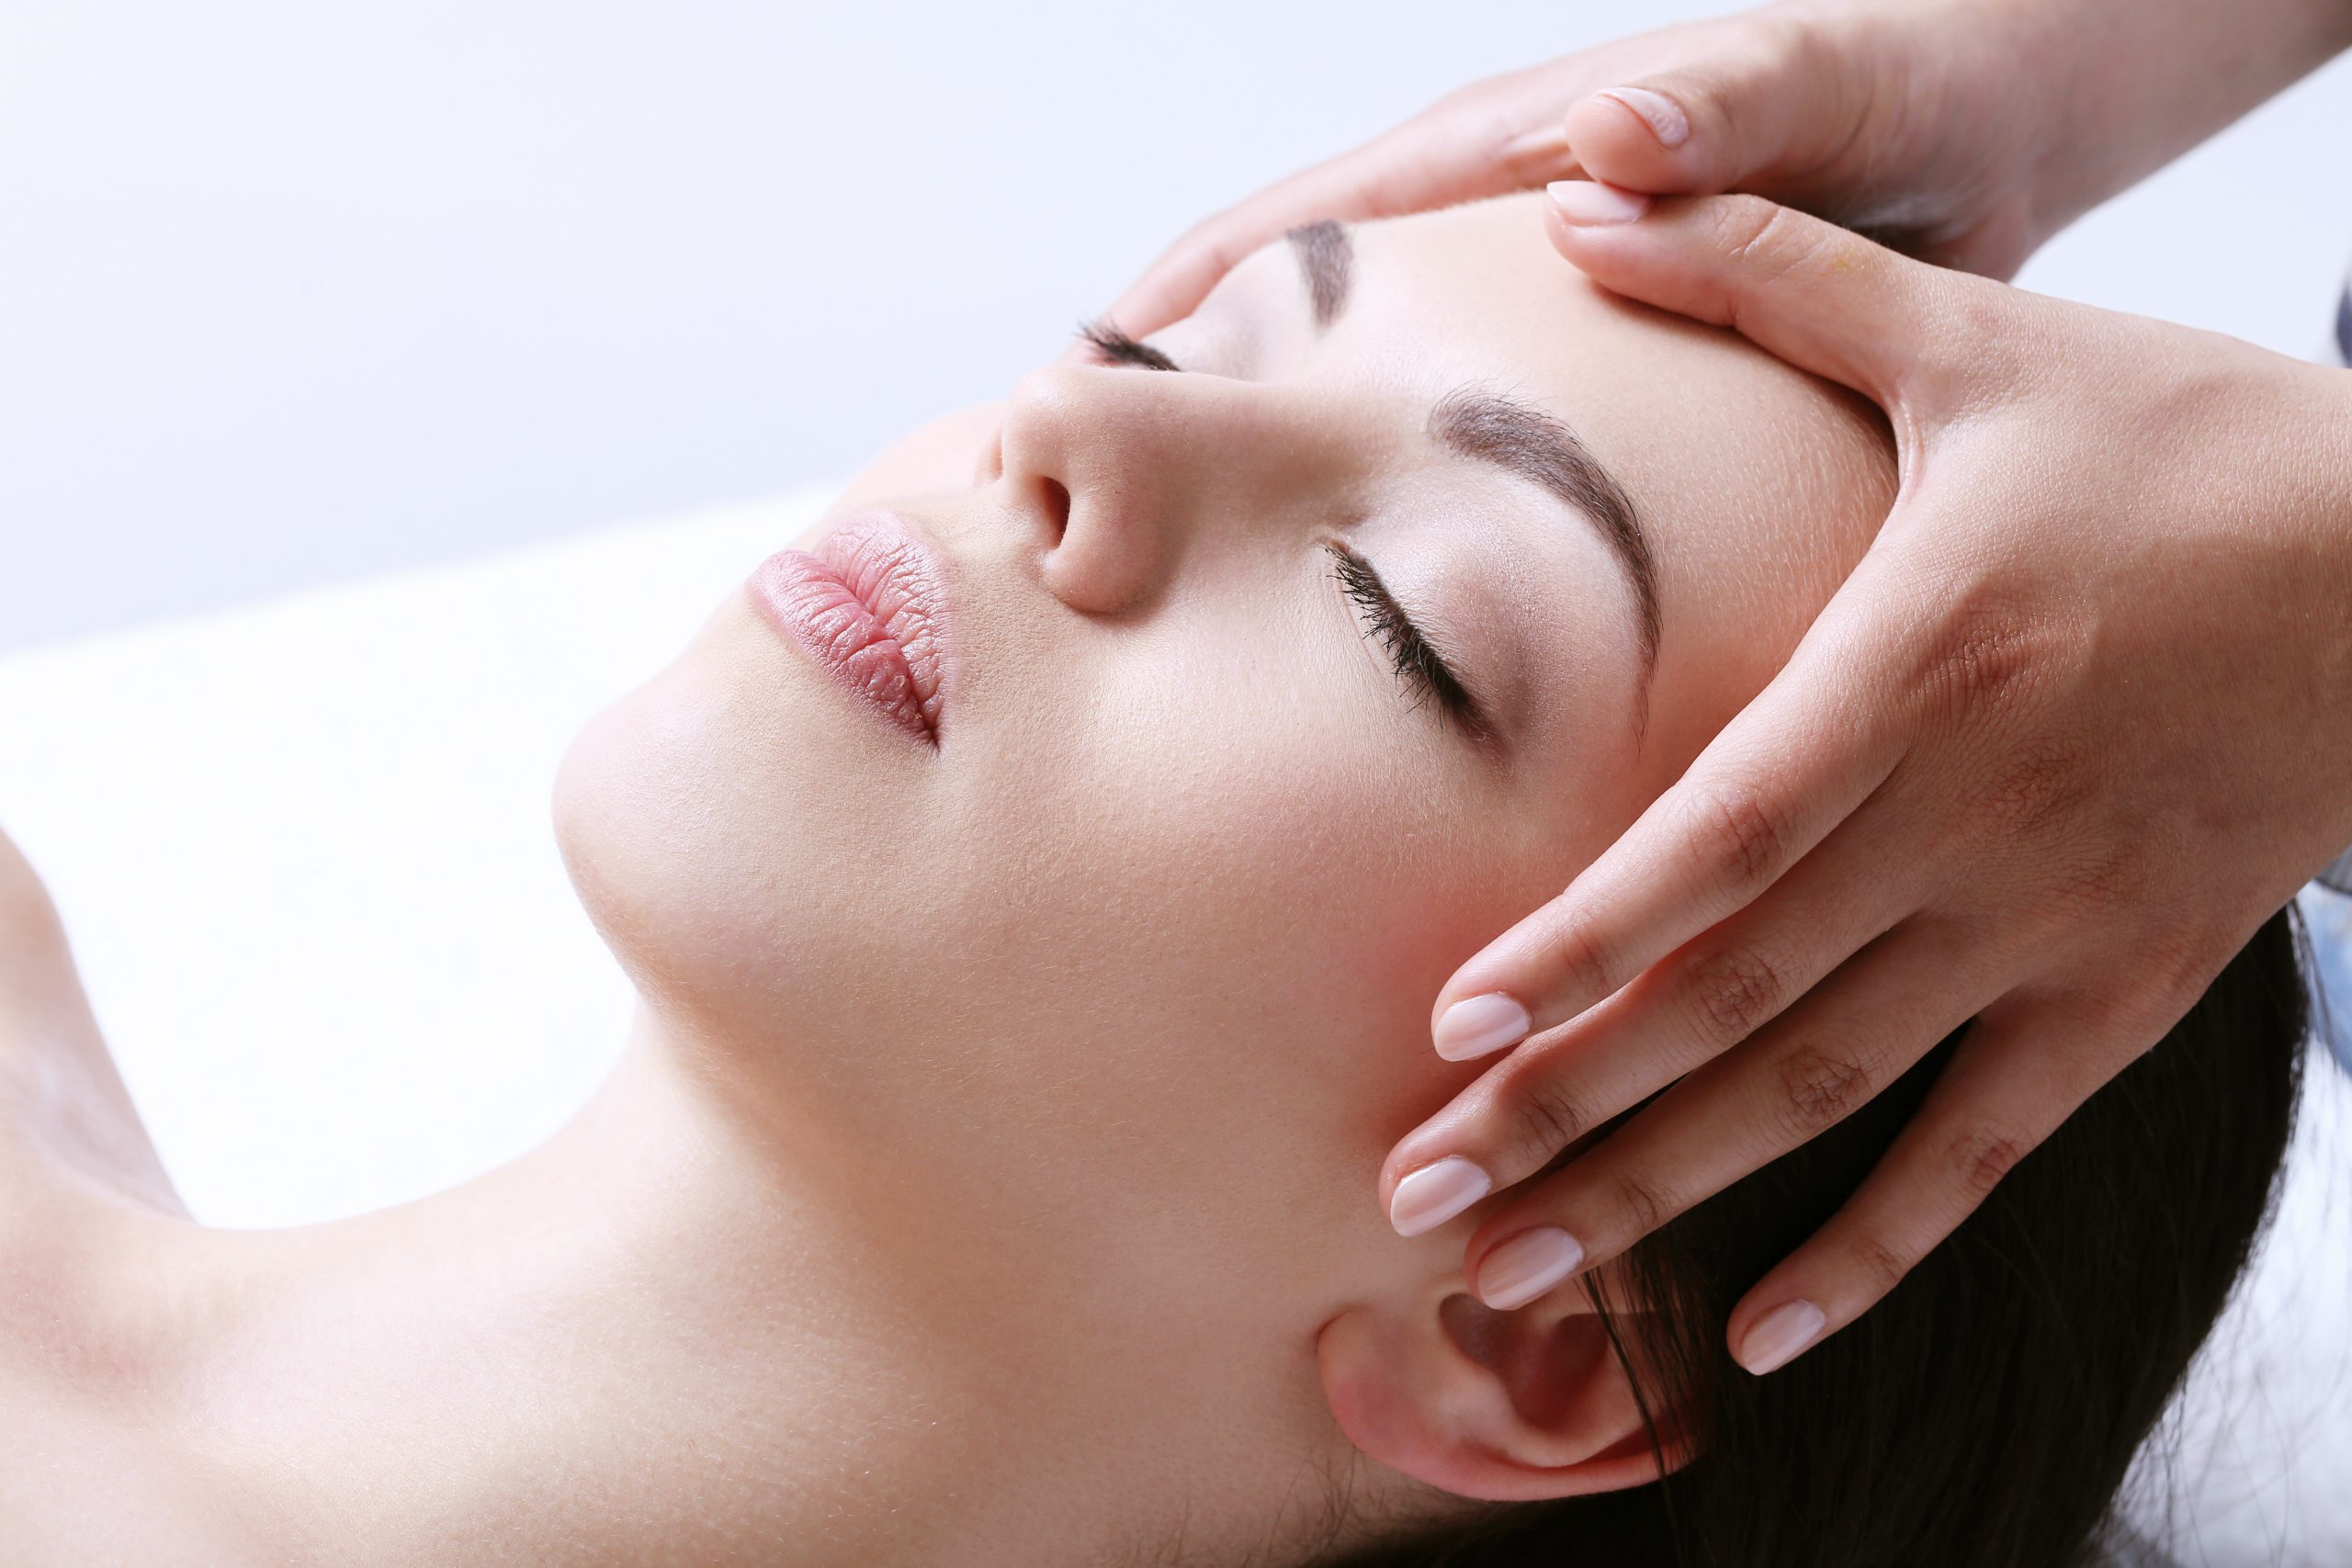 Facial massage and its benefits